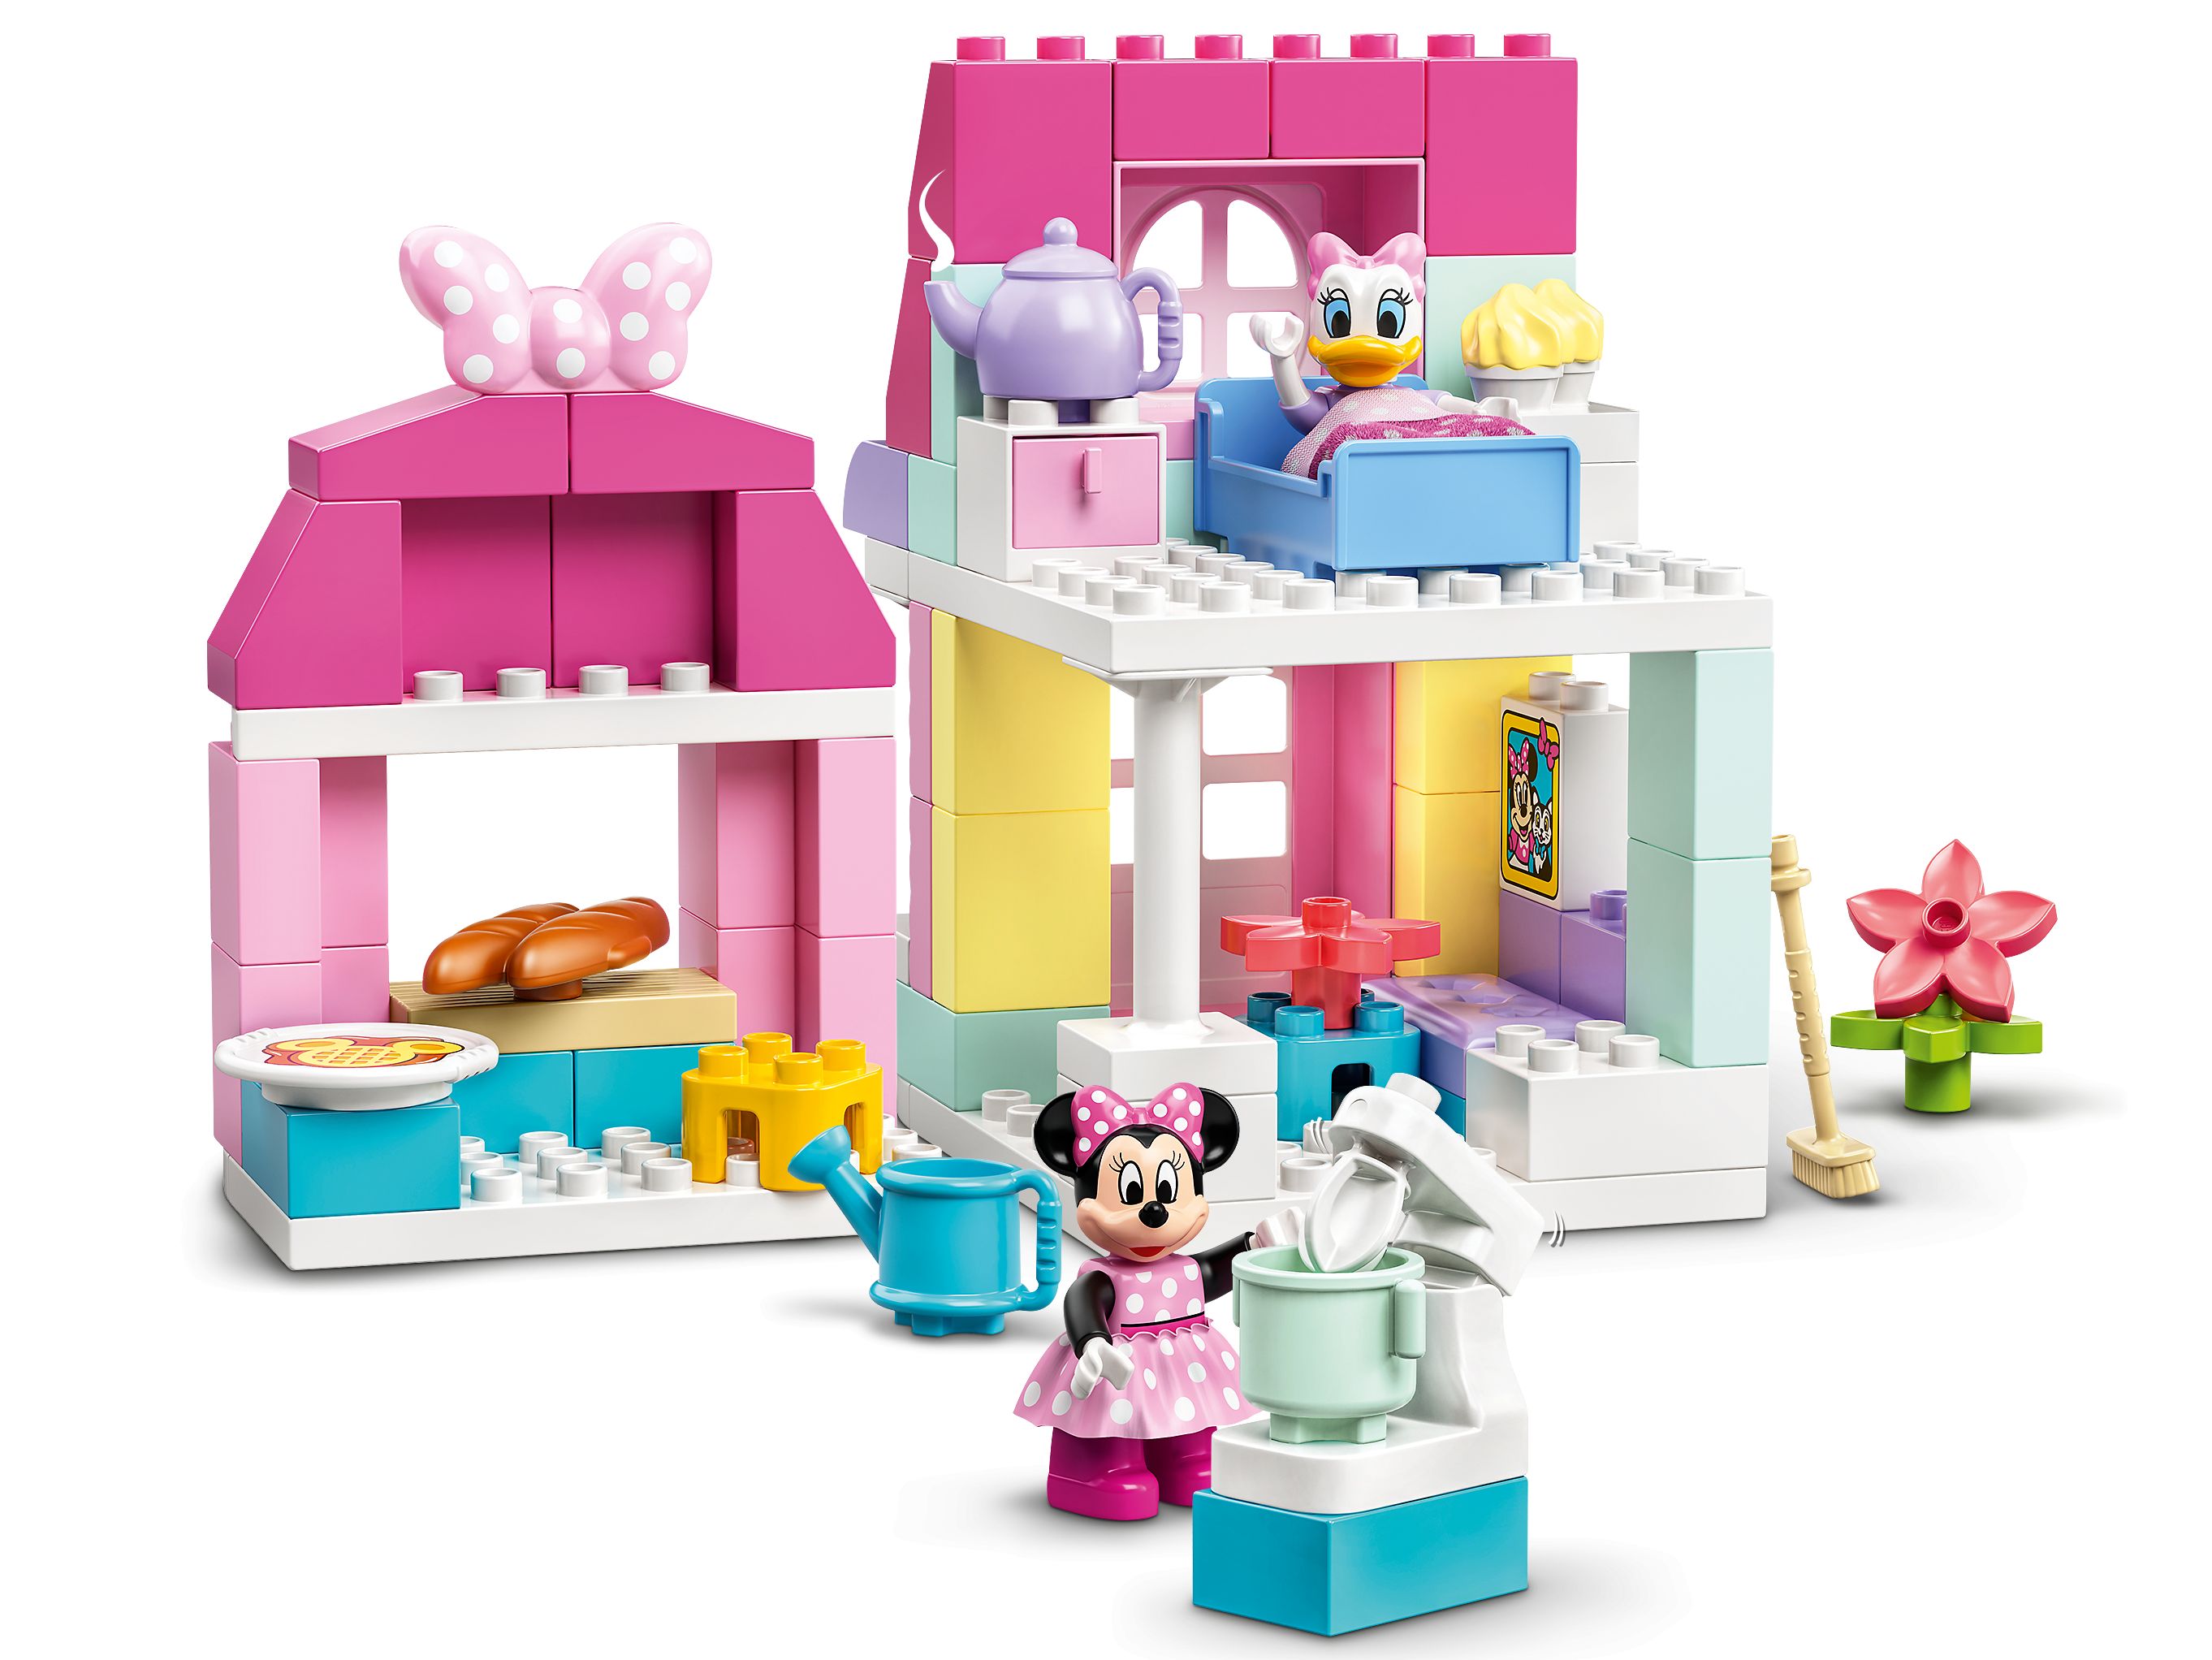 LEGO Duplo 10942 Minnies Haus mit Café LEGO_10942_alt6.jpg